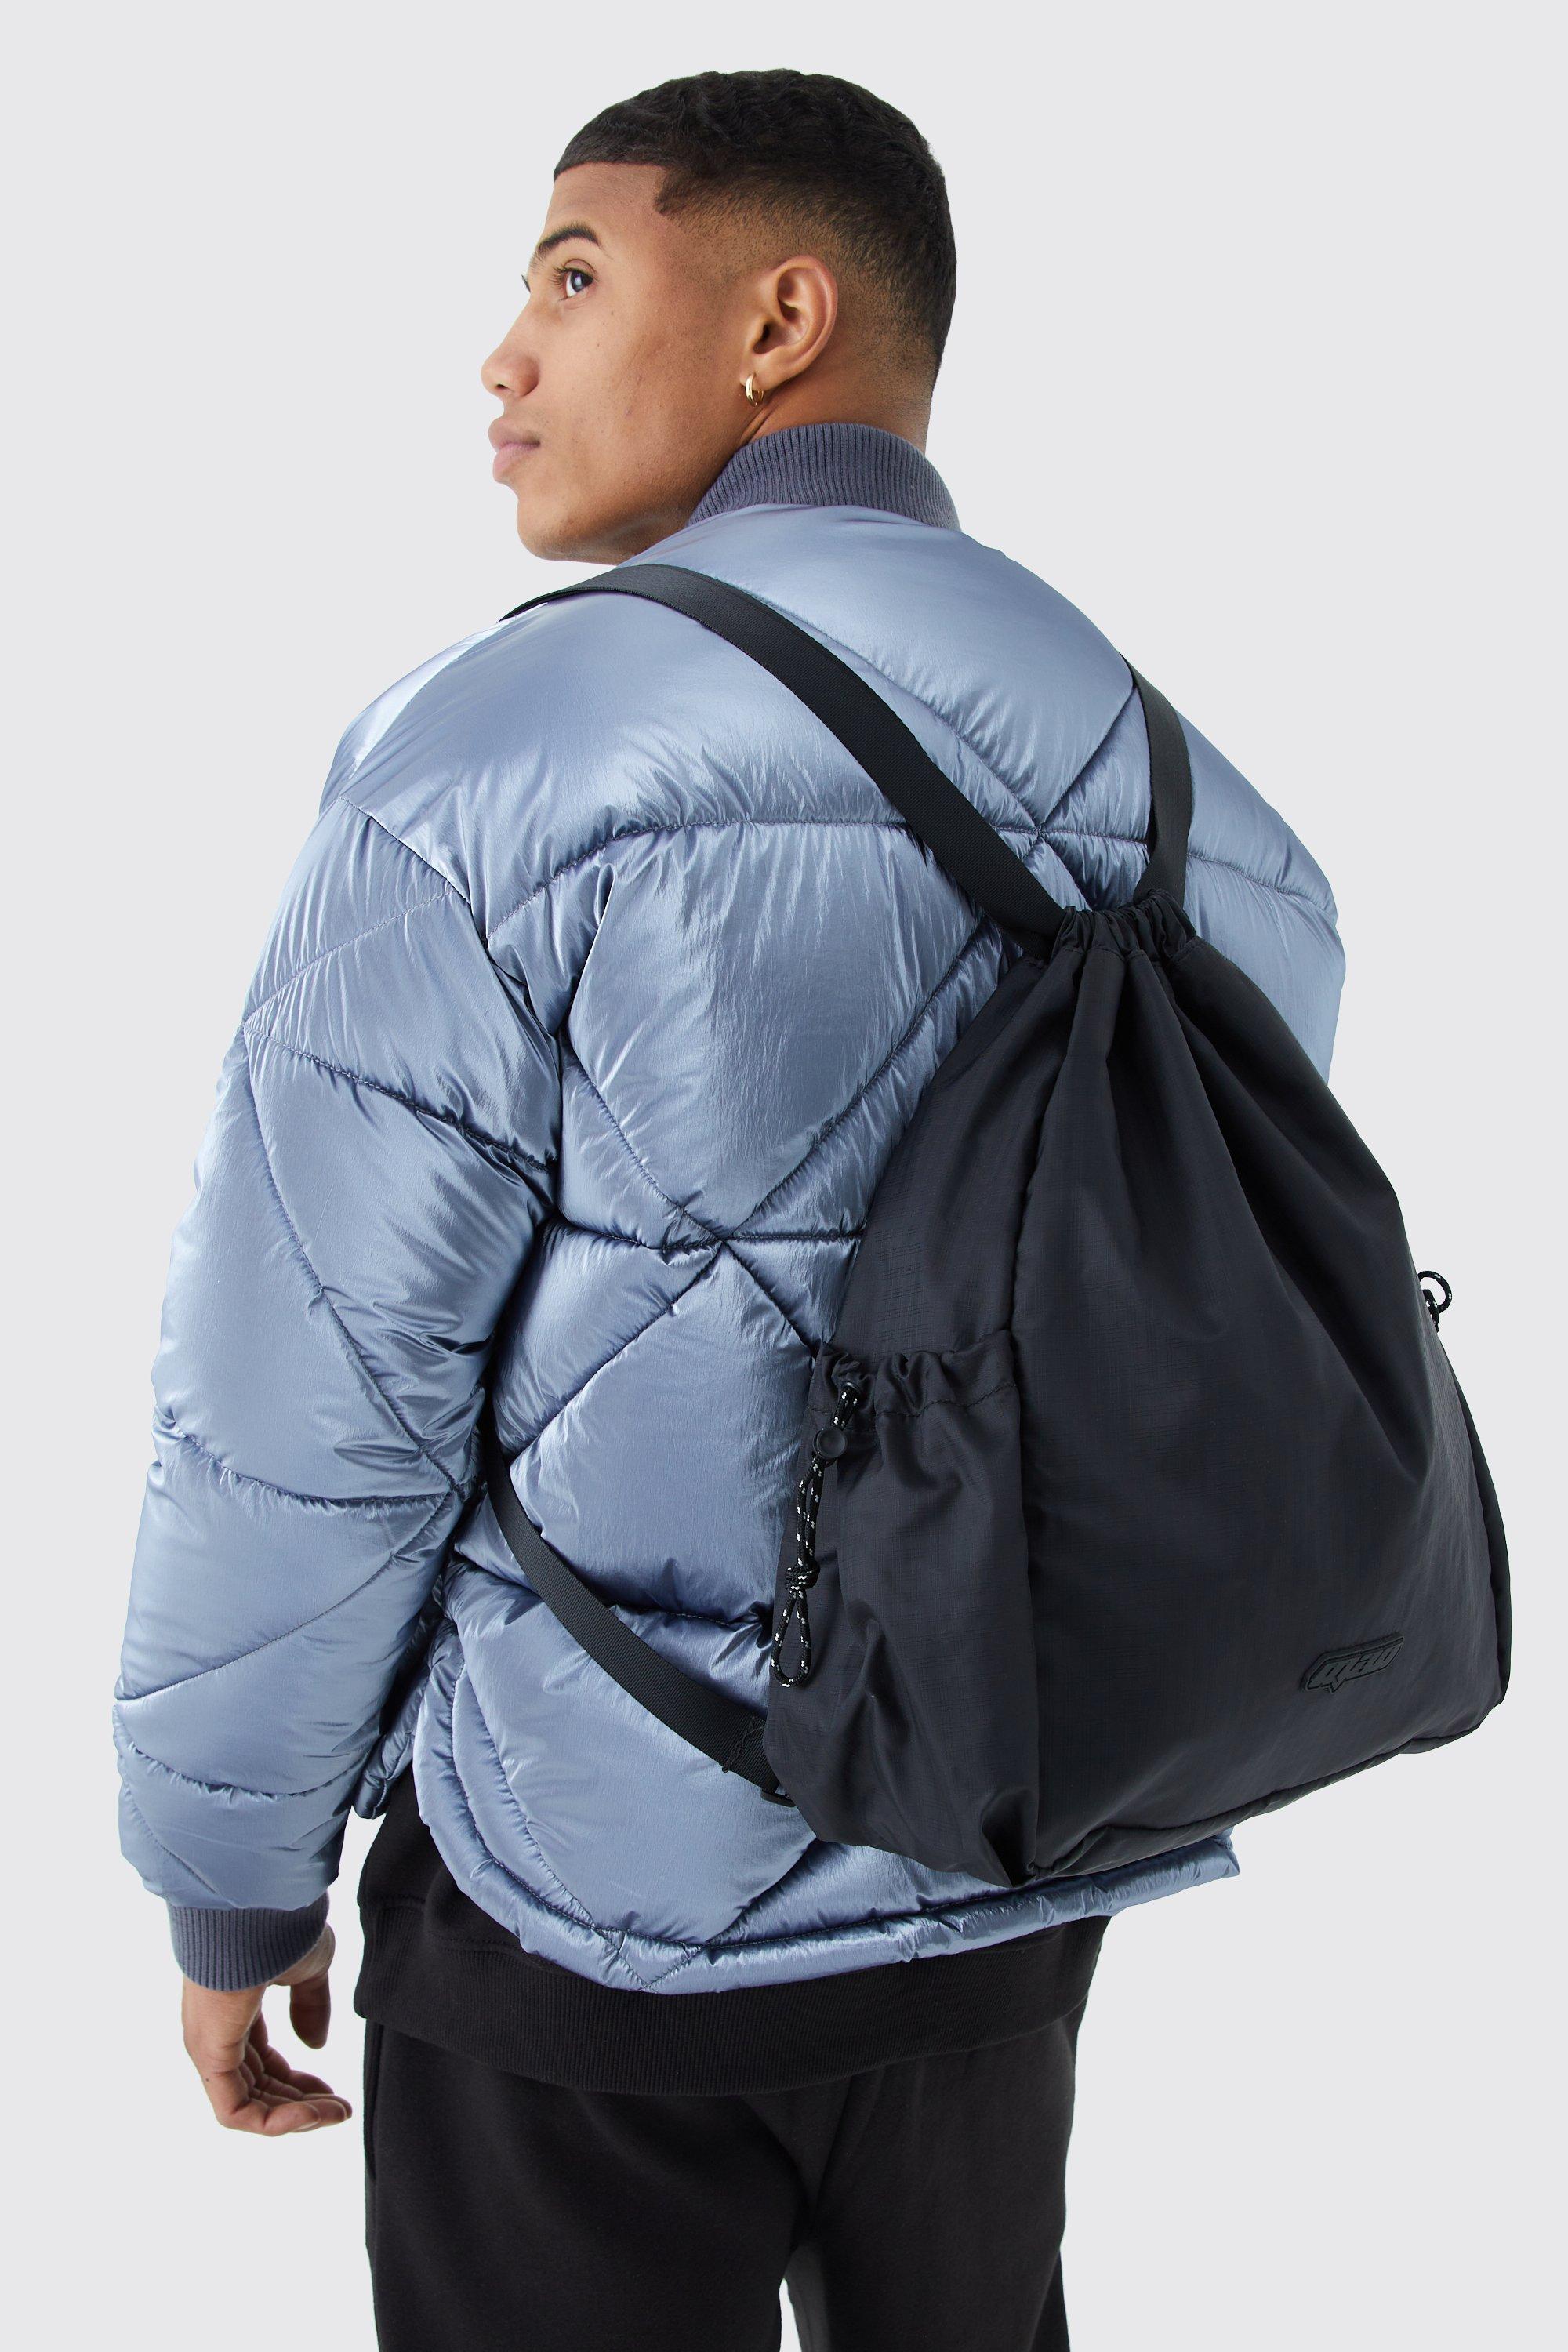 men's nylon ruched back pack - black - one size, black